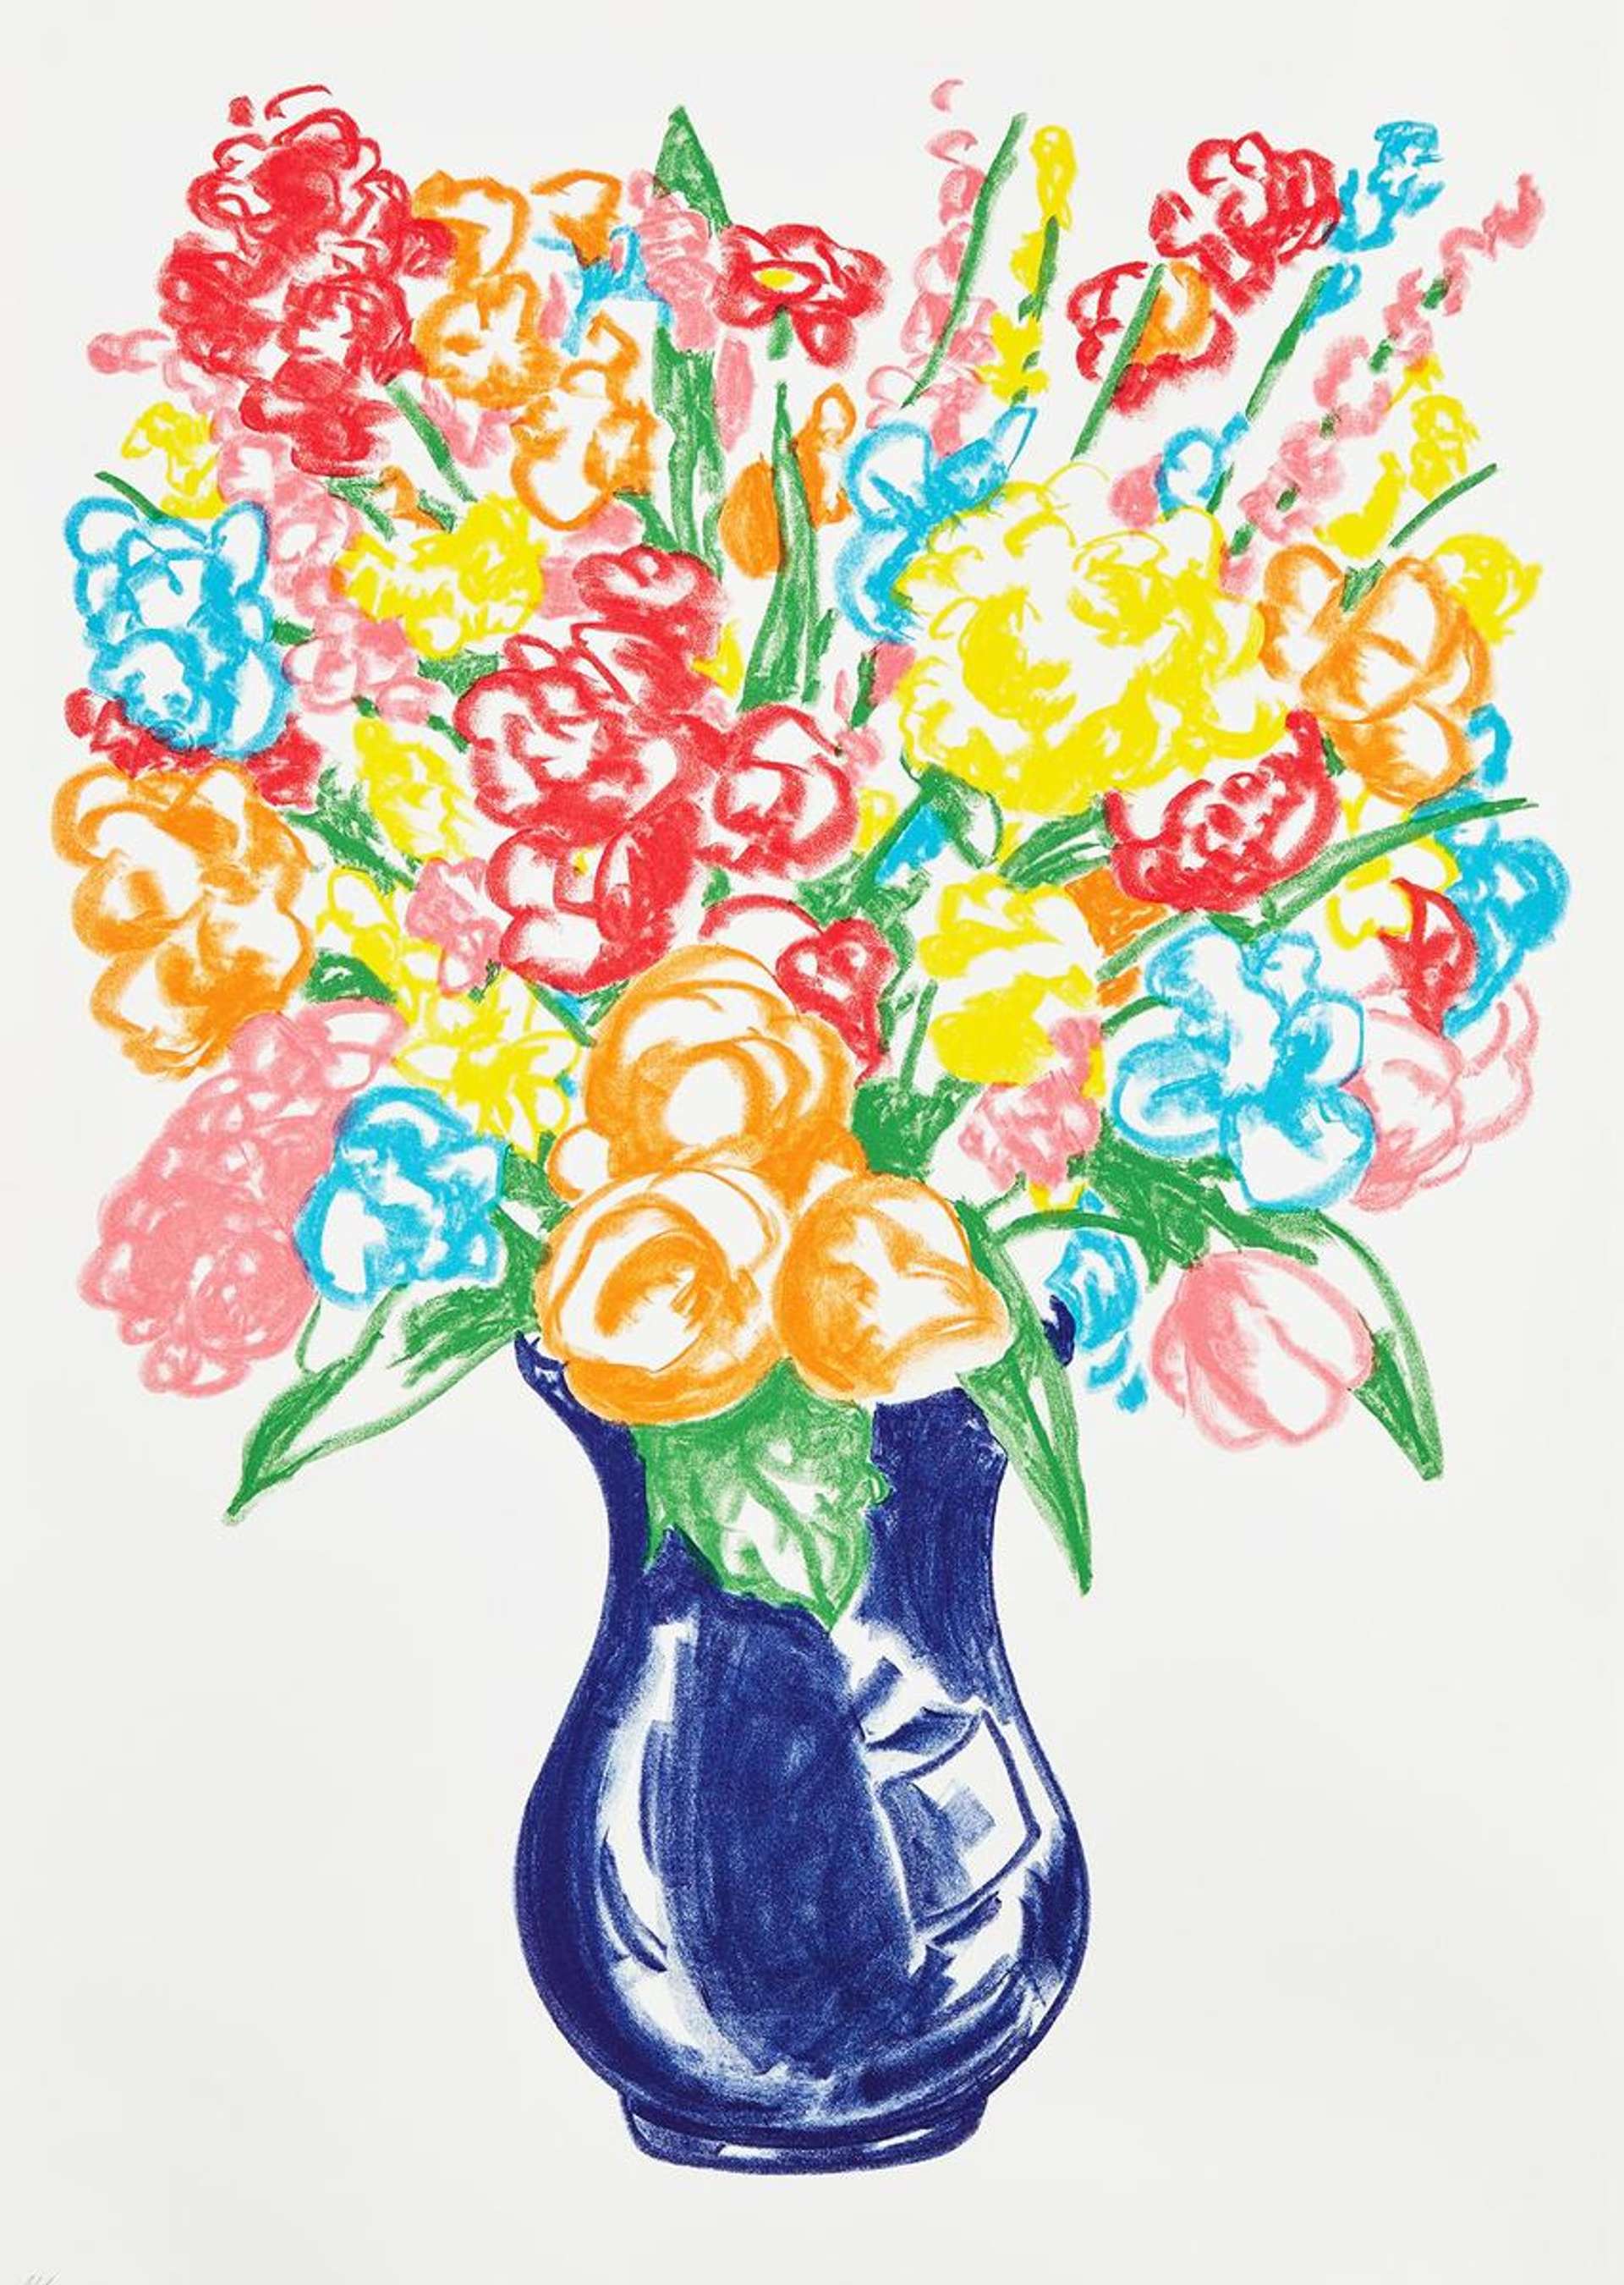 Jeff Koons: Flowers - Signed Print